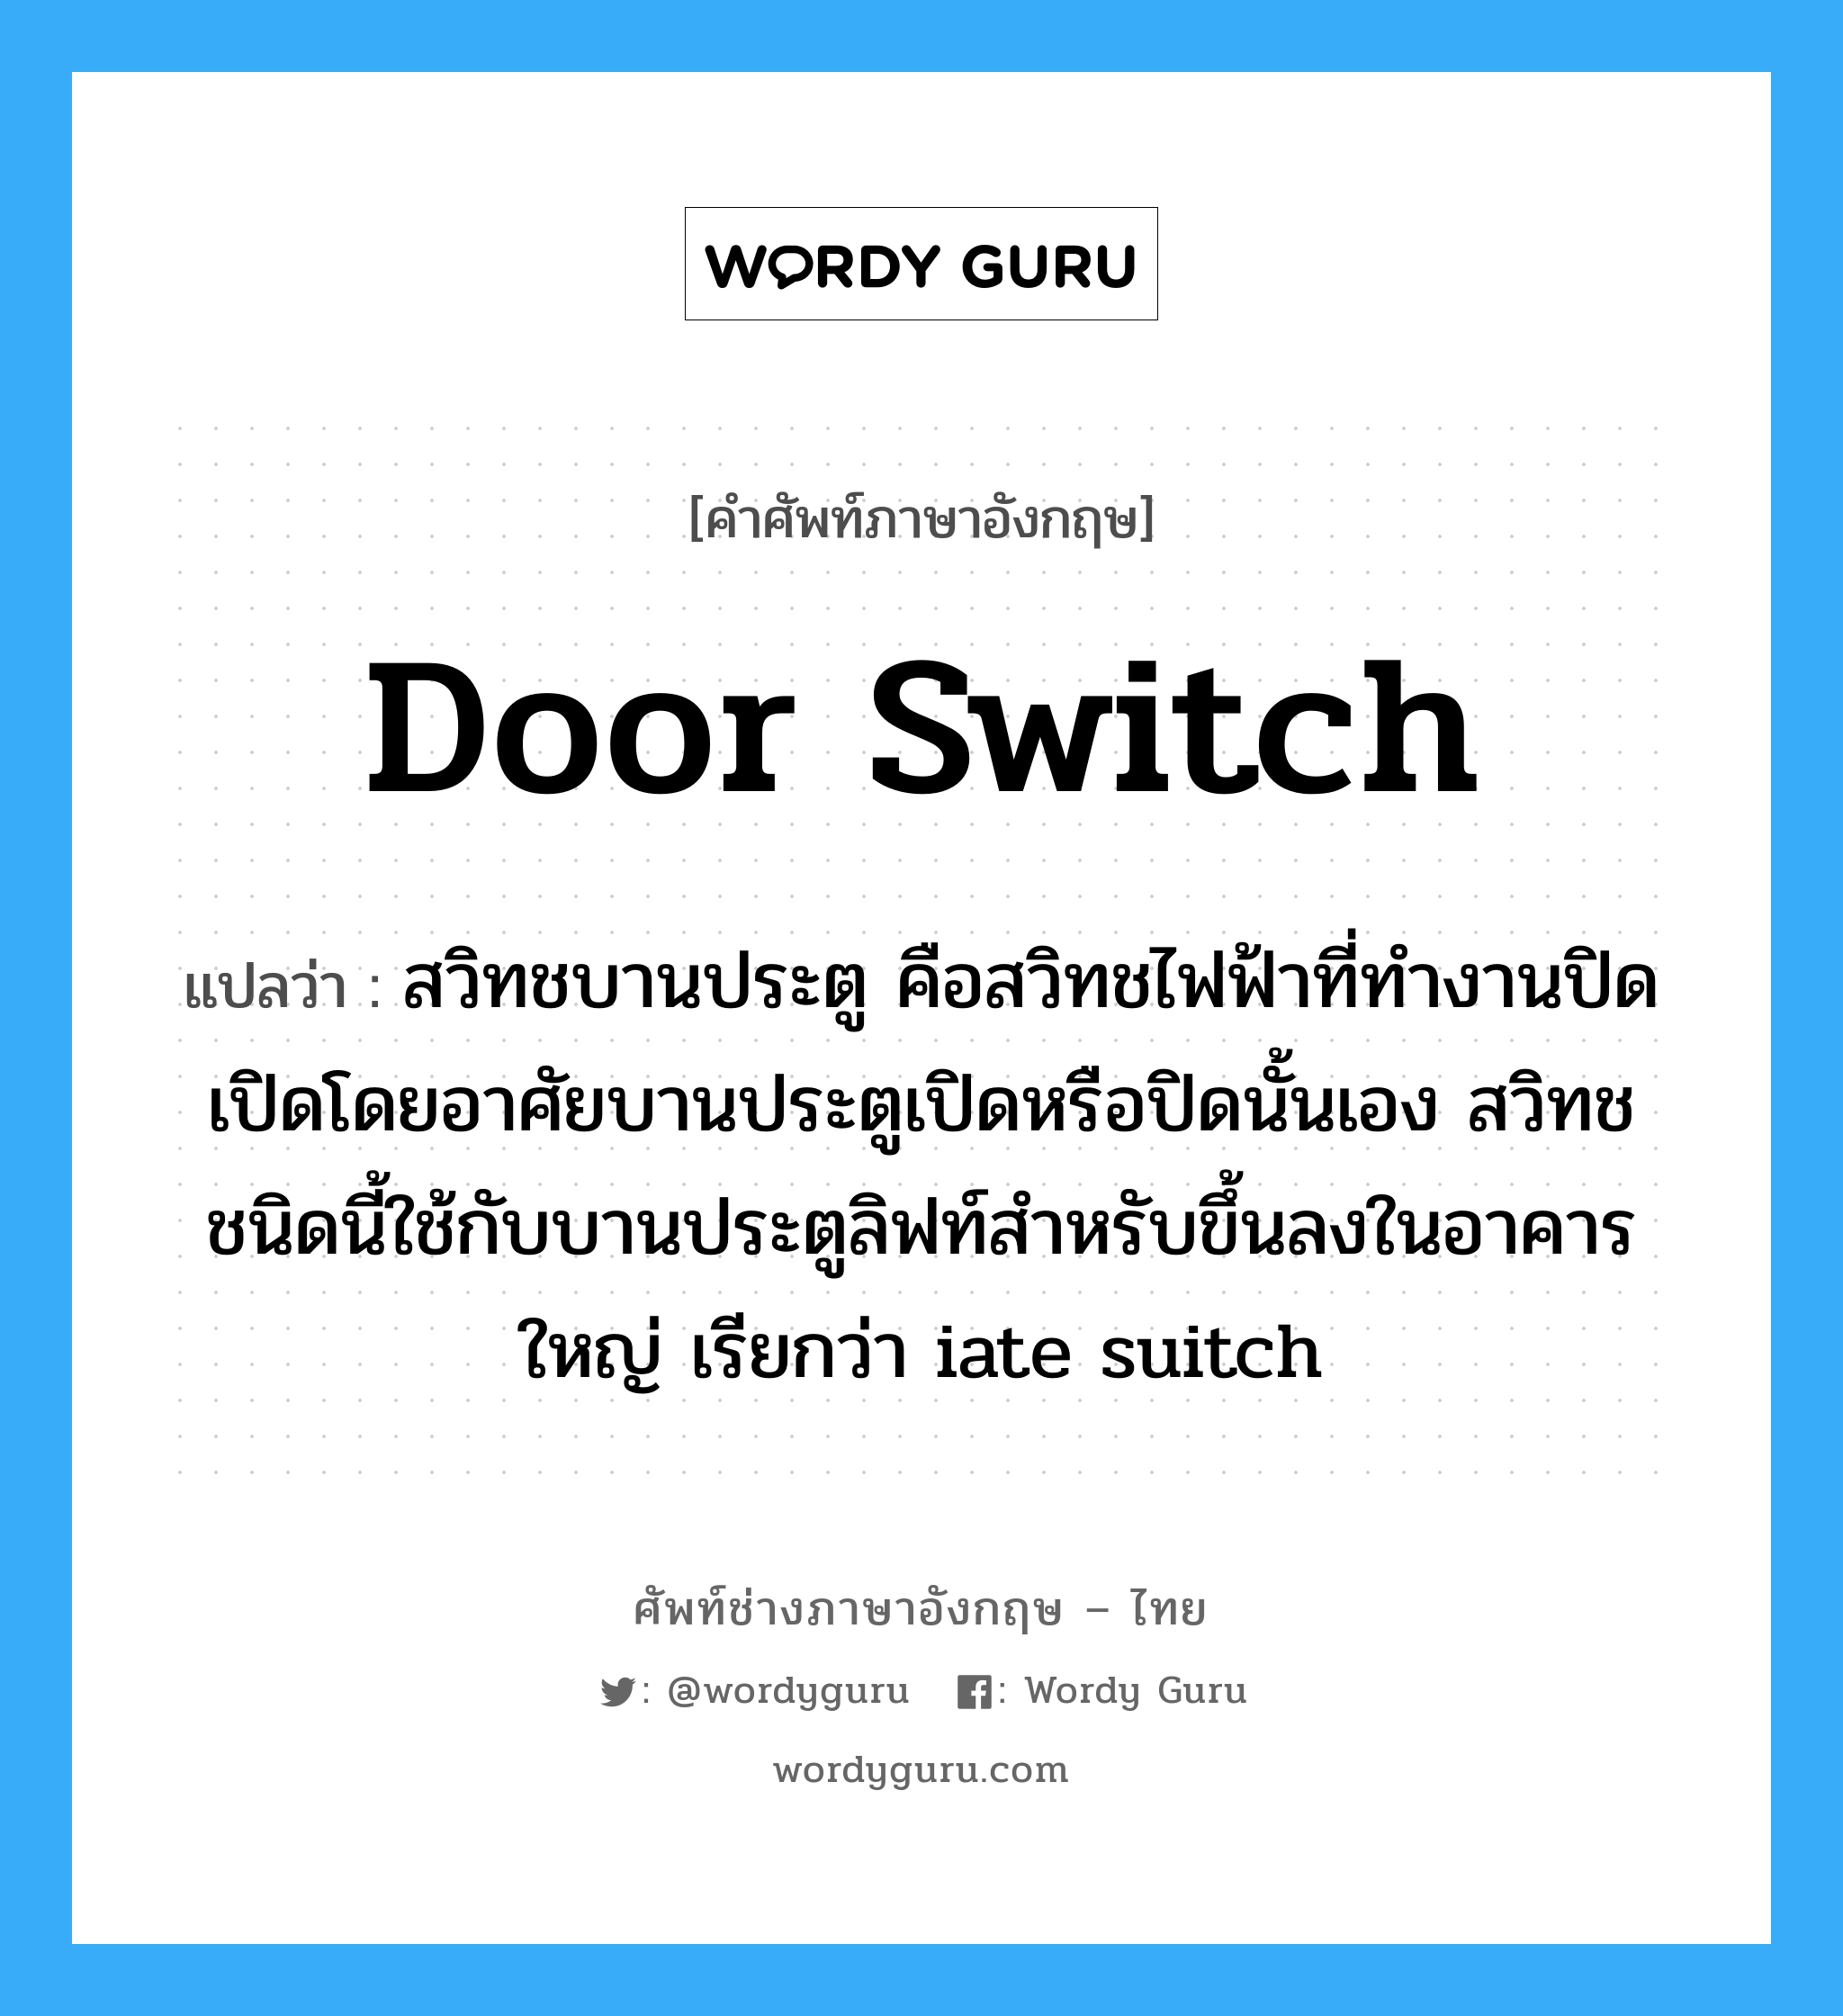 door switch แปลว่า?, คำศัพท์ช่างภาษาอังกฤษ - ไทย door switch คำศัพท์ภาษาอังกฤษ door switch แปลว่า สวิทชบานประตู คือสวิทชไฟฟ้าที่ทำงานปิดเปิดโดยอาศัยบานประตูเปิดหรือปิดนั้นเอง สวิทชชนิดนี้ใช้กับบานประตูลิฟท์สำหรับขึ้นลงในอาคารใหญ่ เรียกว่า iate suitch